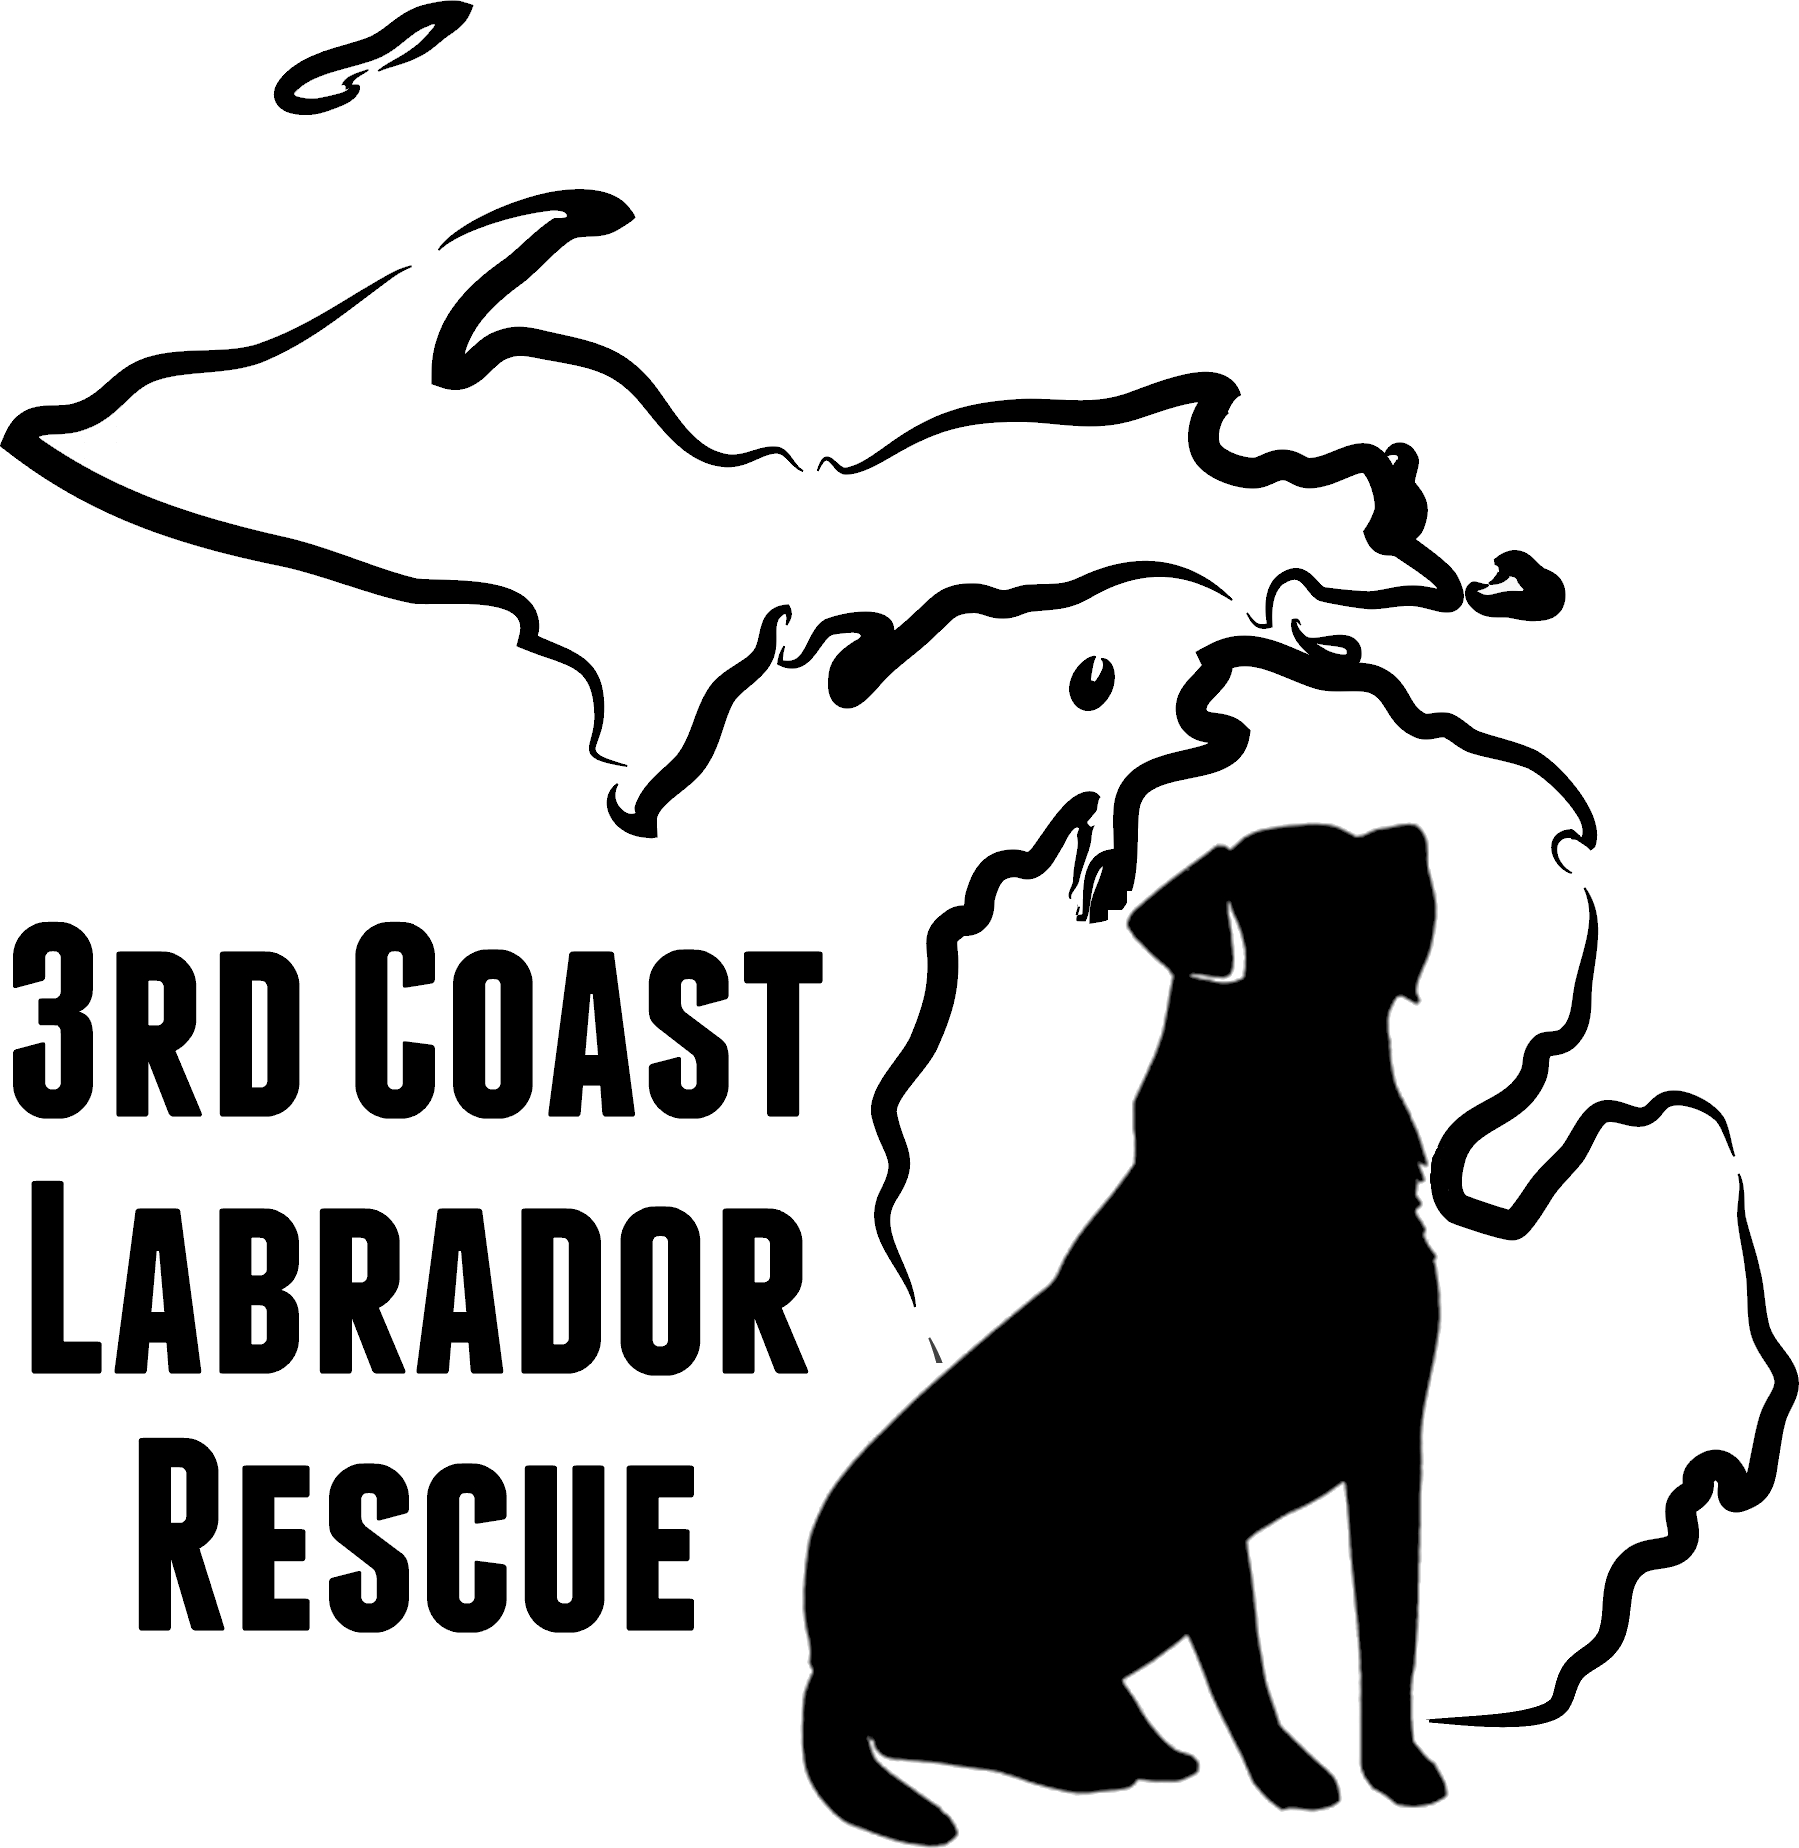 3rd Coast Labrador Rescue